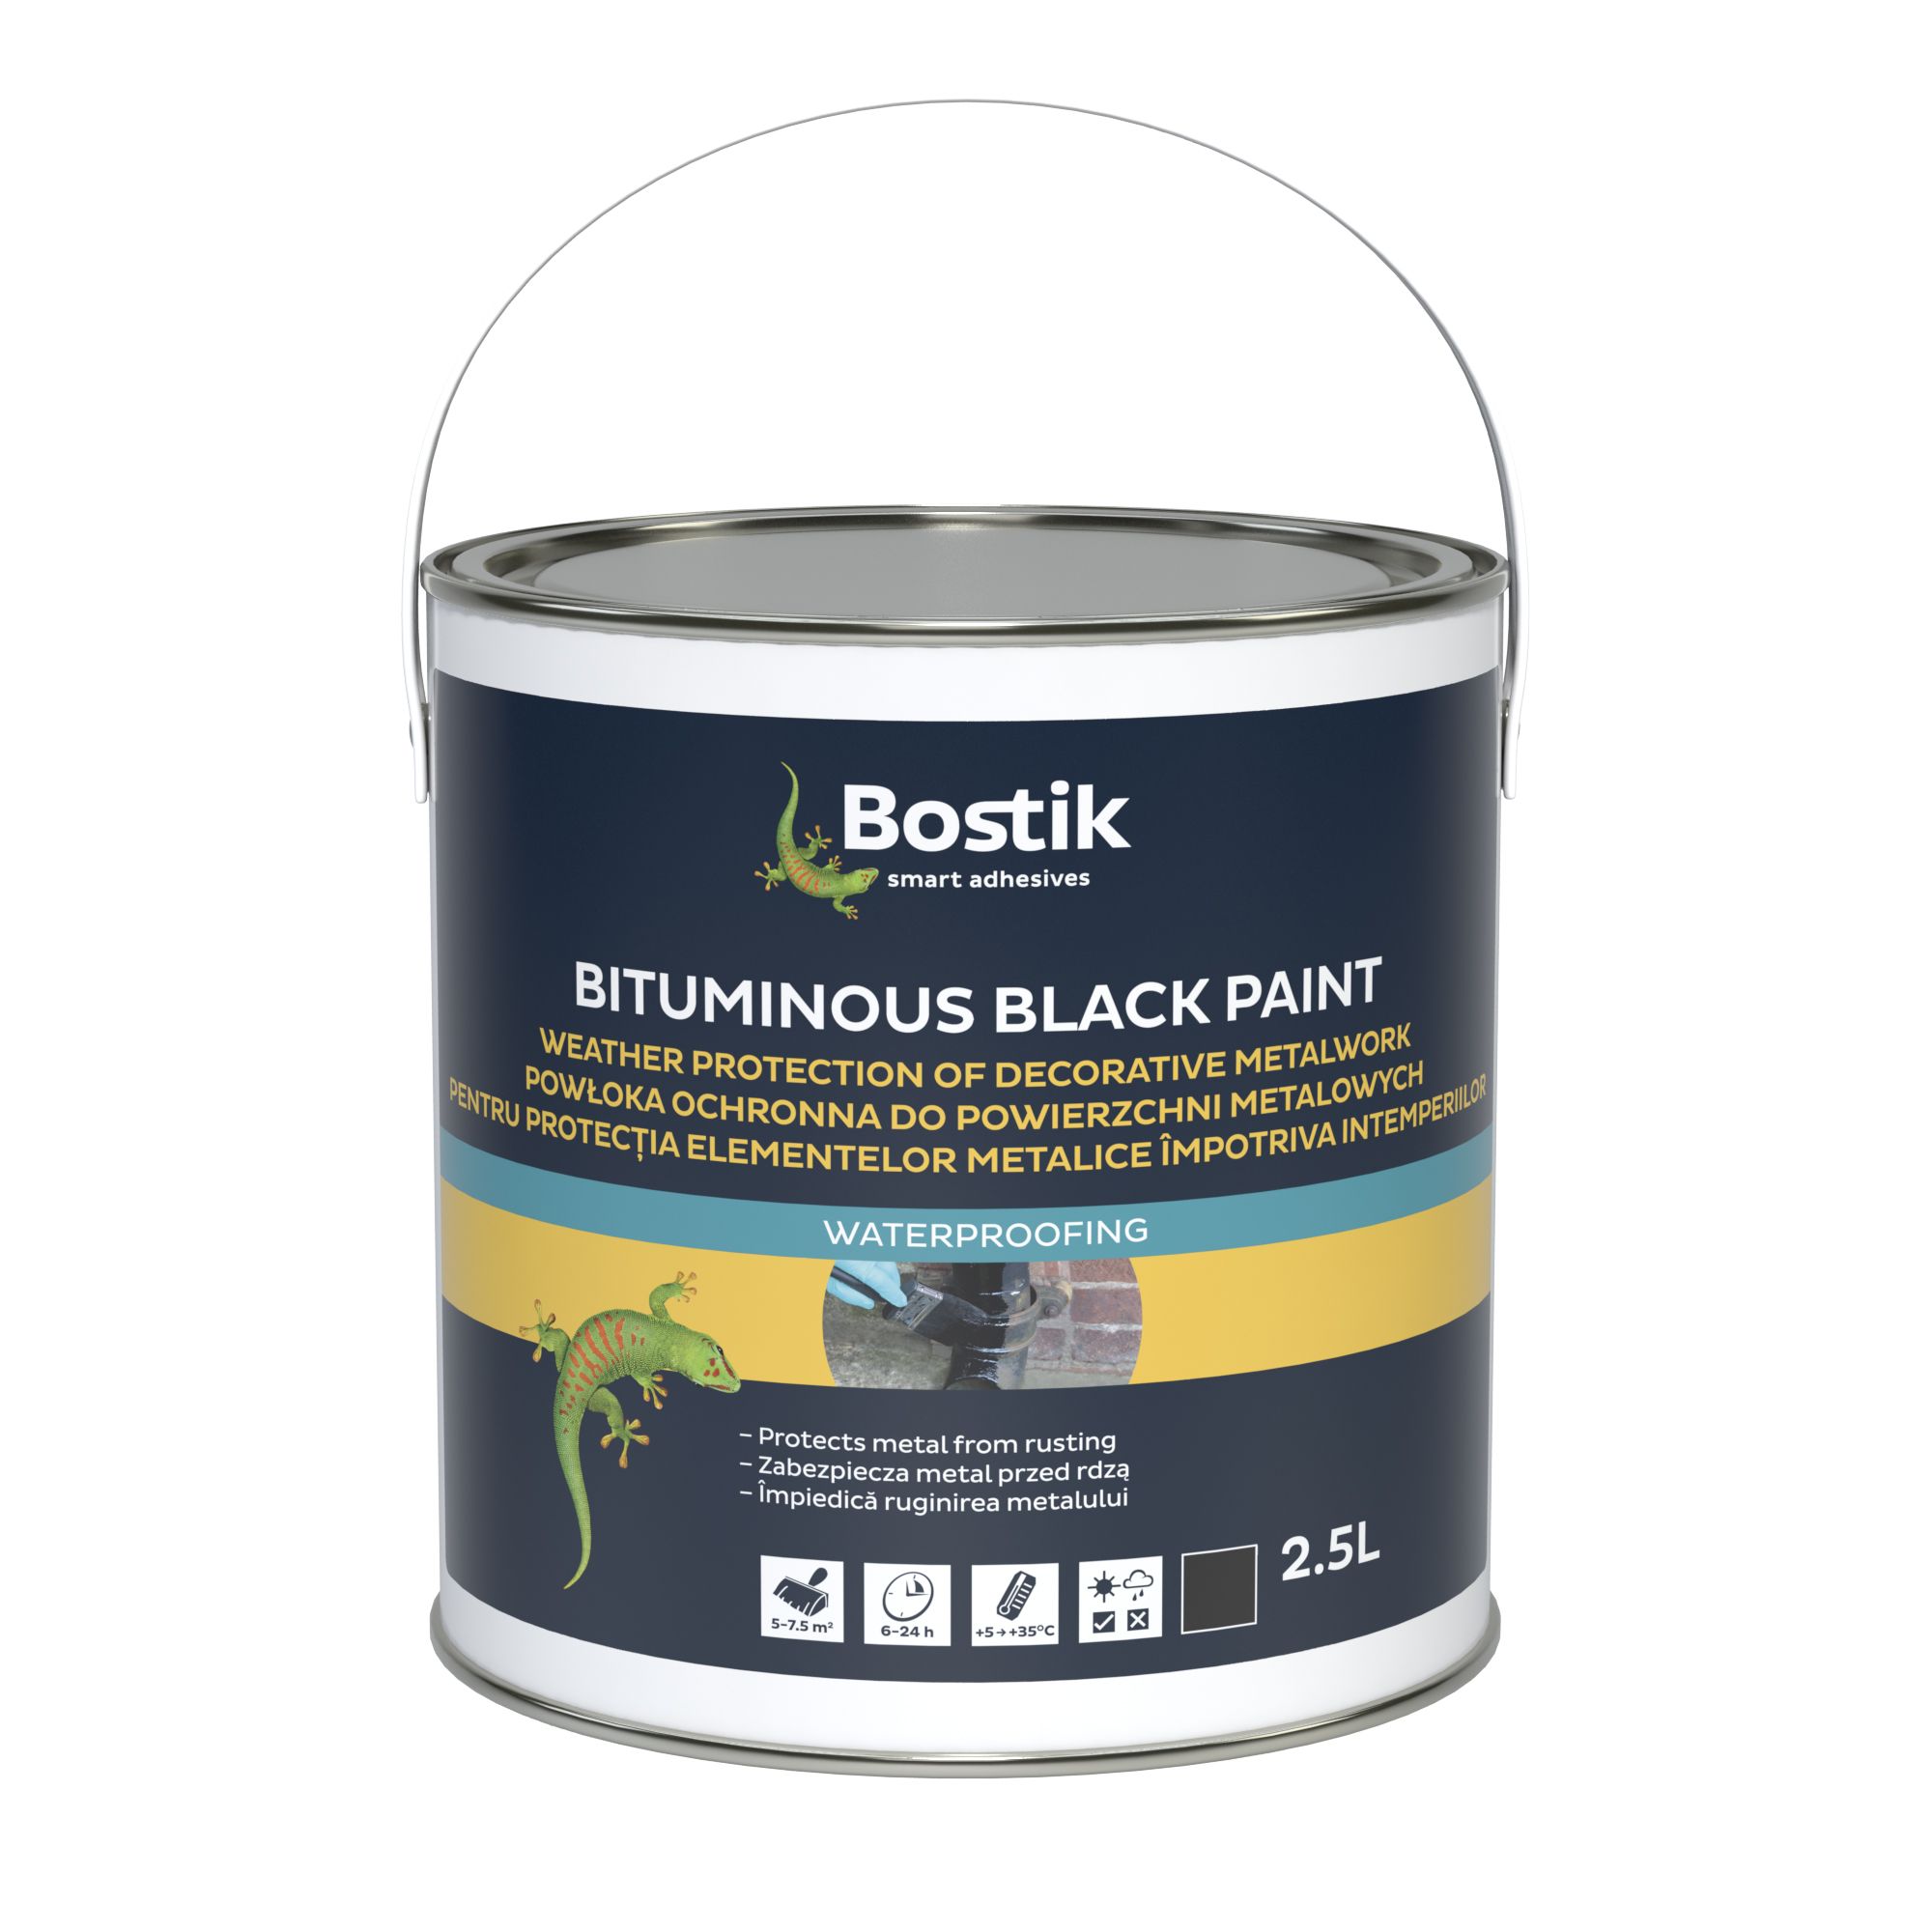 Bostik Waterproof Black Paint 2.5 LITRE - Topline Bolands